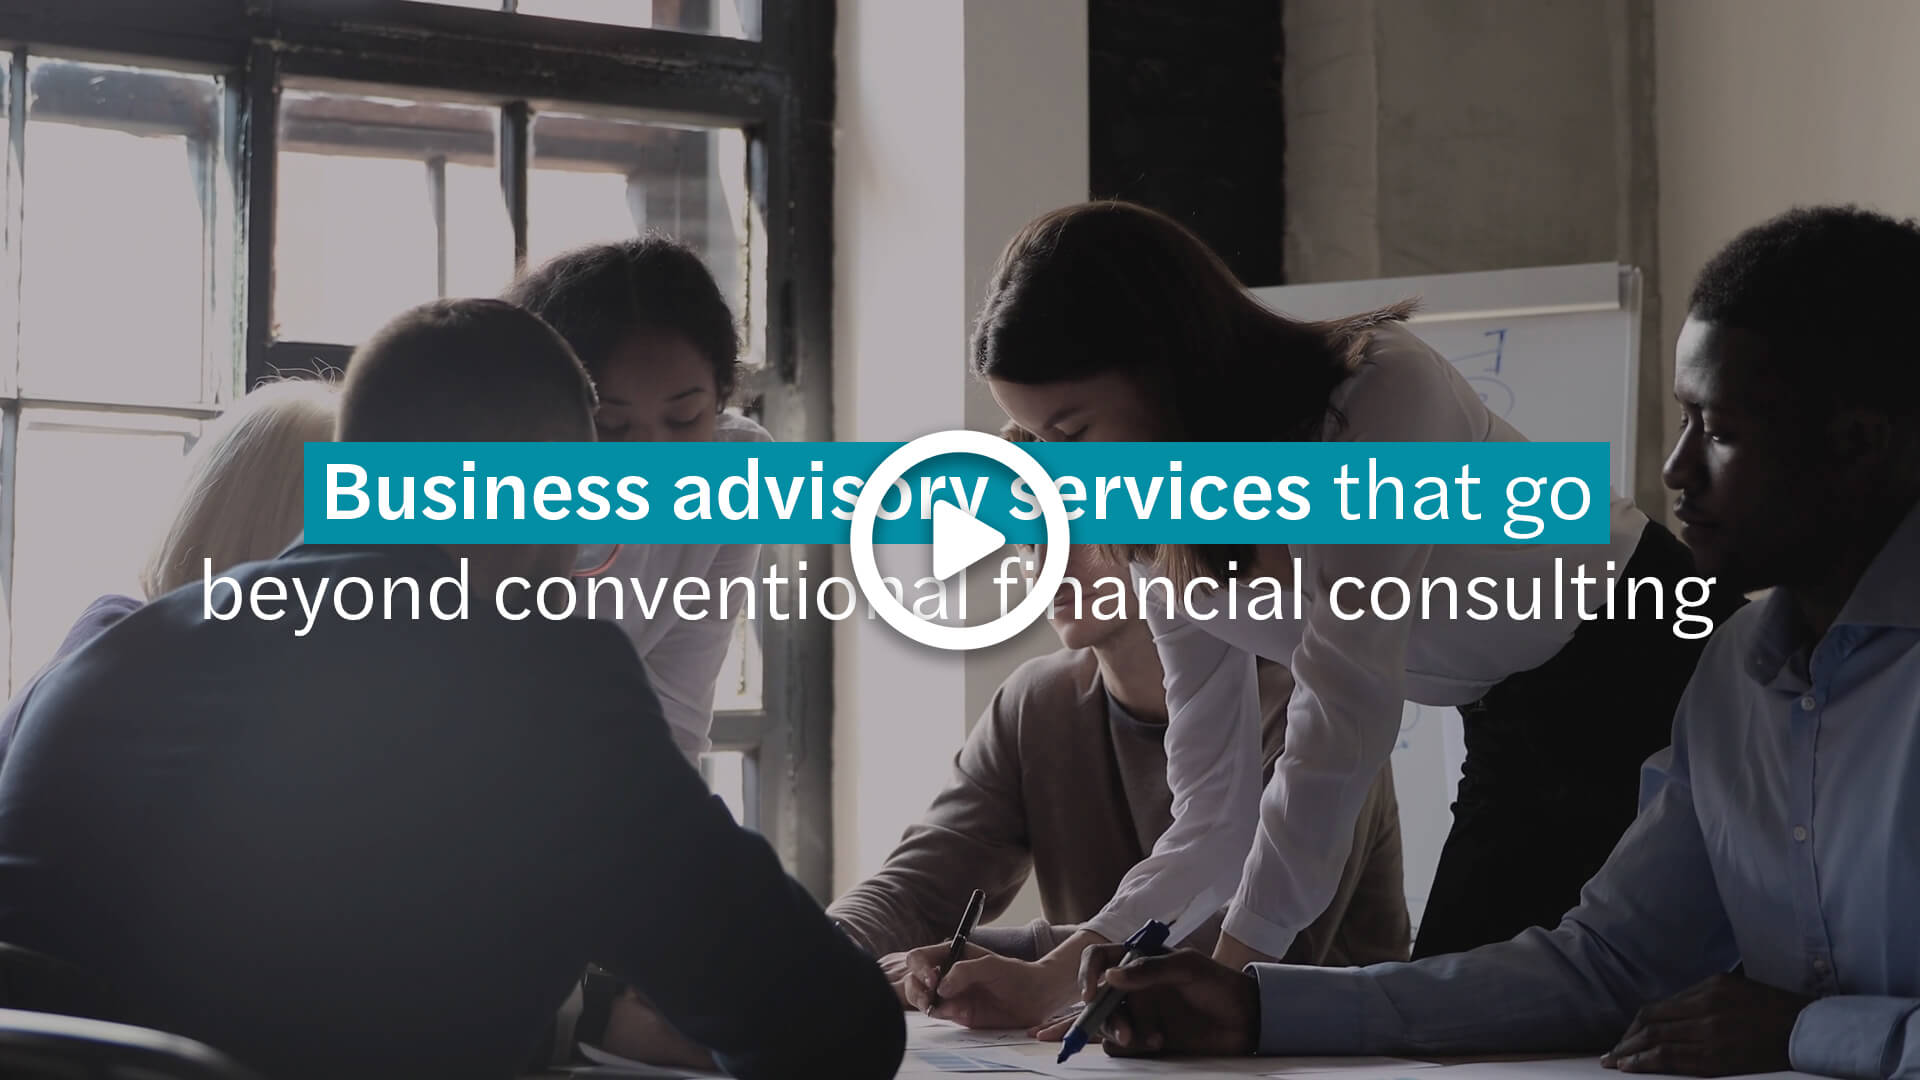 Best business advisory service provider in Dubai, Abu Dhabi UAE - Mazars